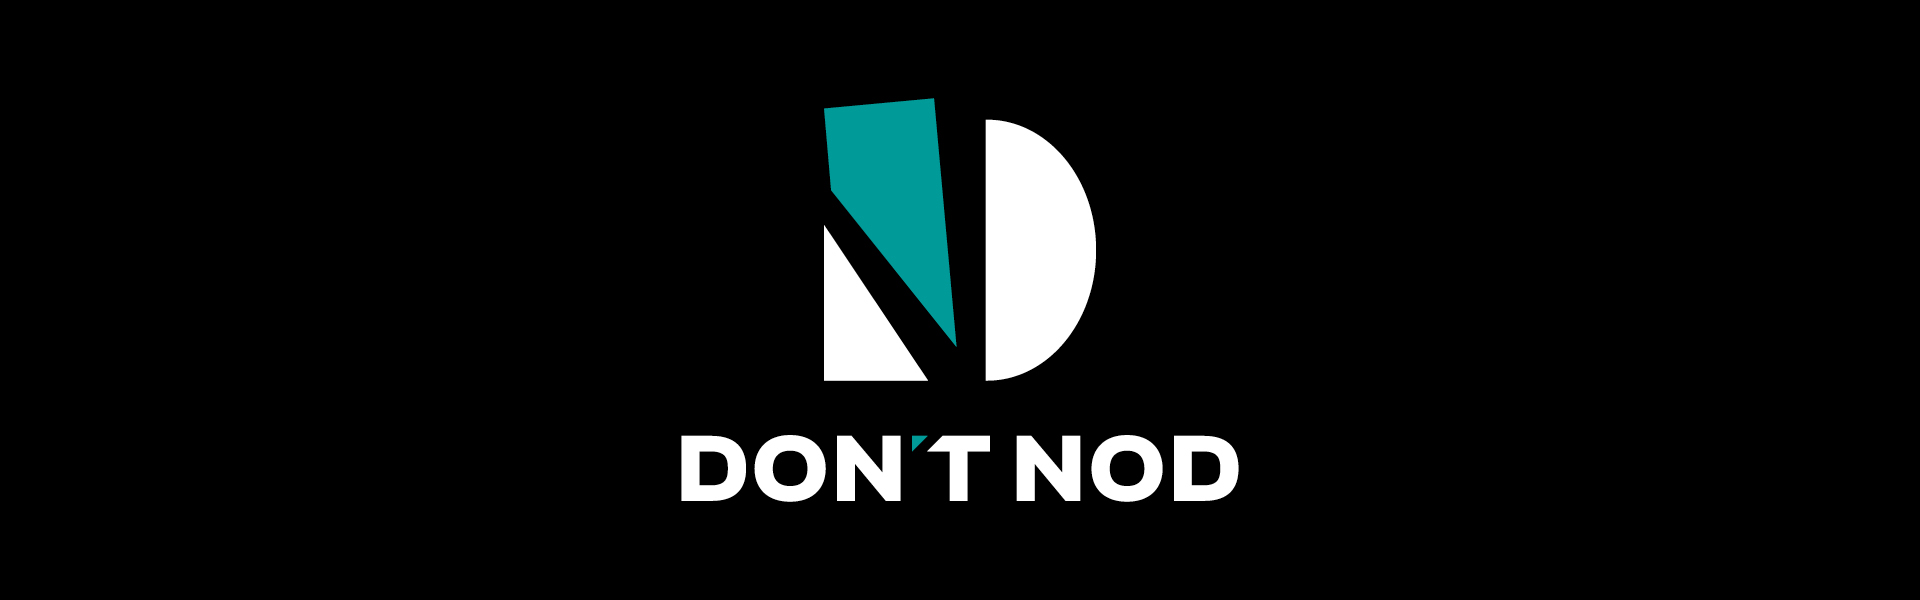 DON’T NOD unveils a new visual identity  